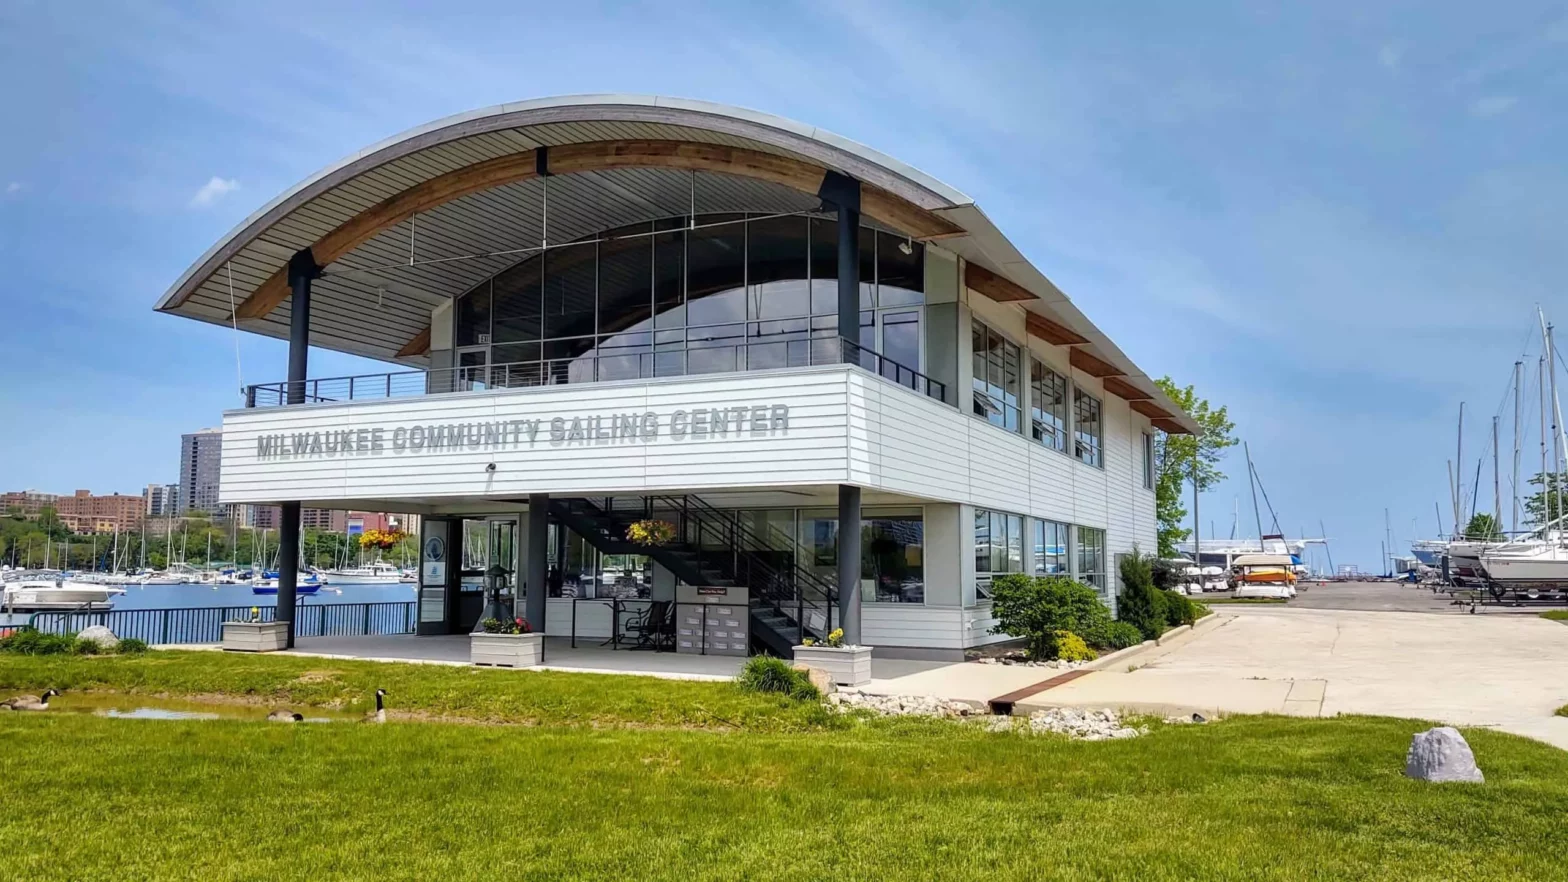 Milwaukee Community Sailing Center